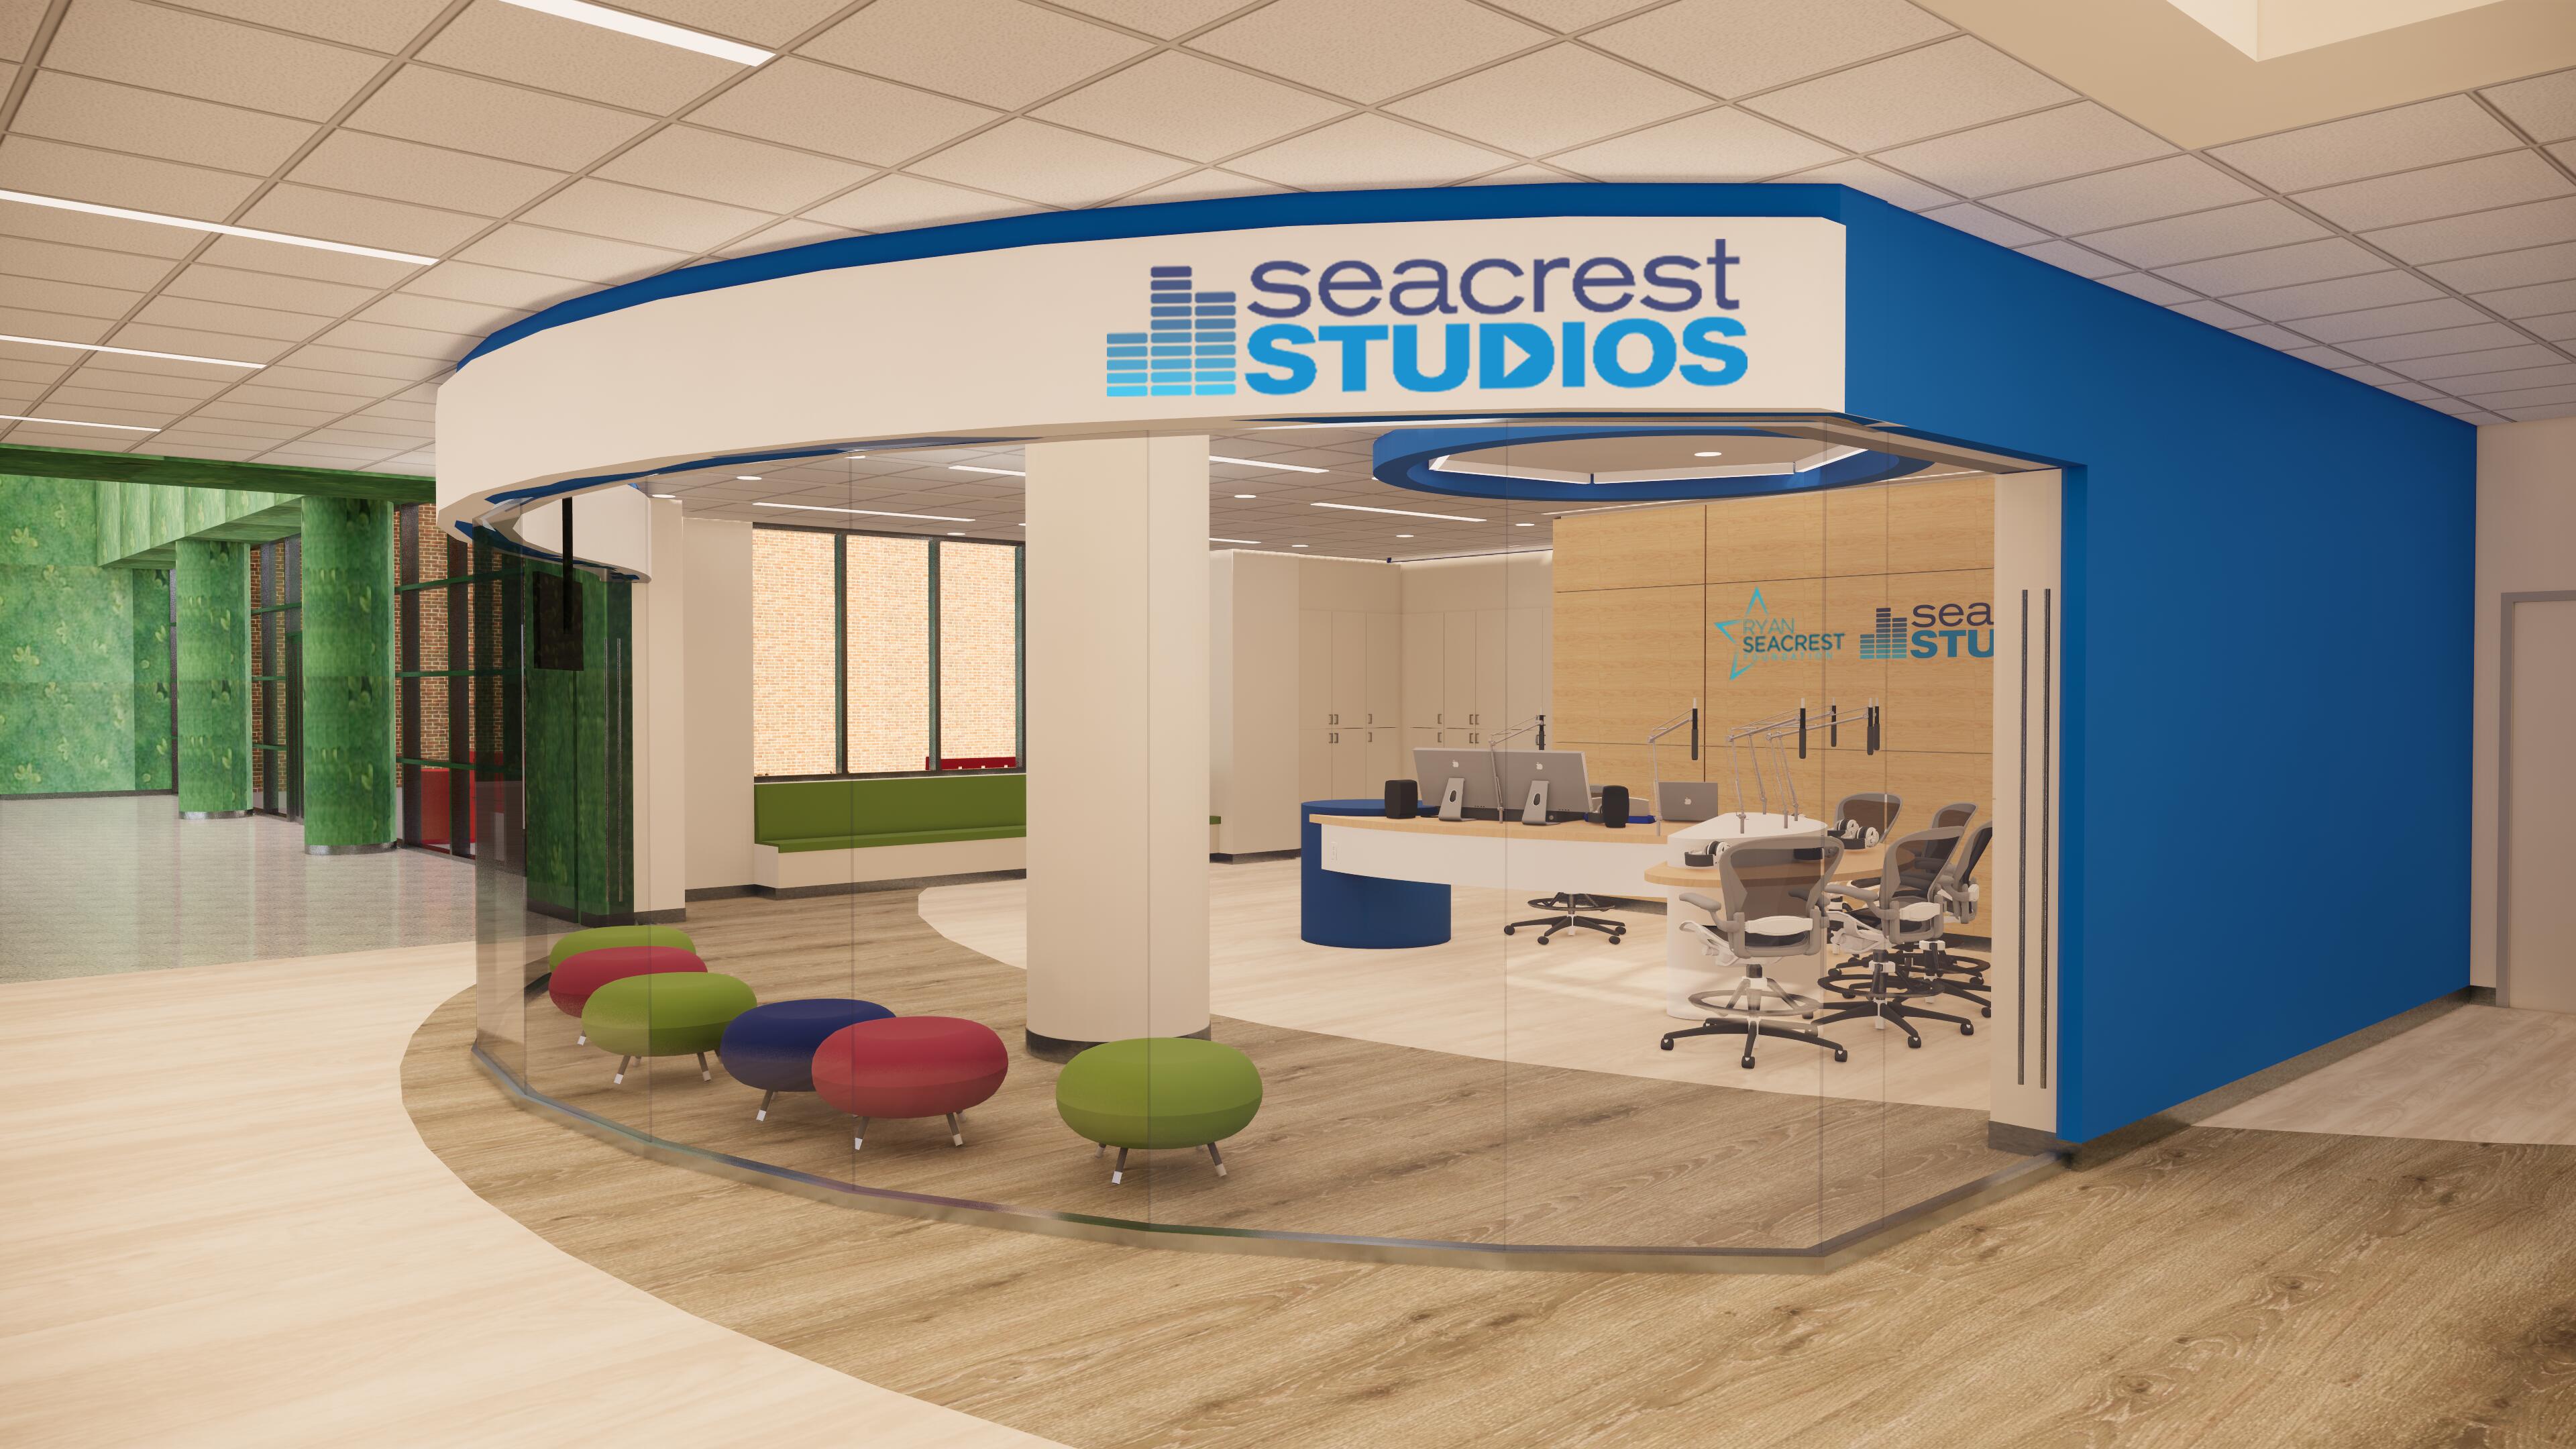 Ryan Seacrest Announces 11th Seacrest Studio in Orlando, Florida! Details | Ryan Seacrest - iHeartRadio